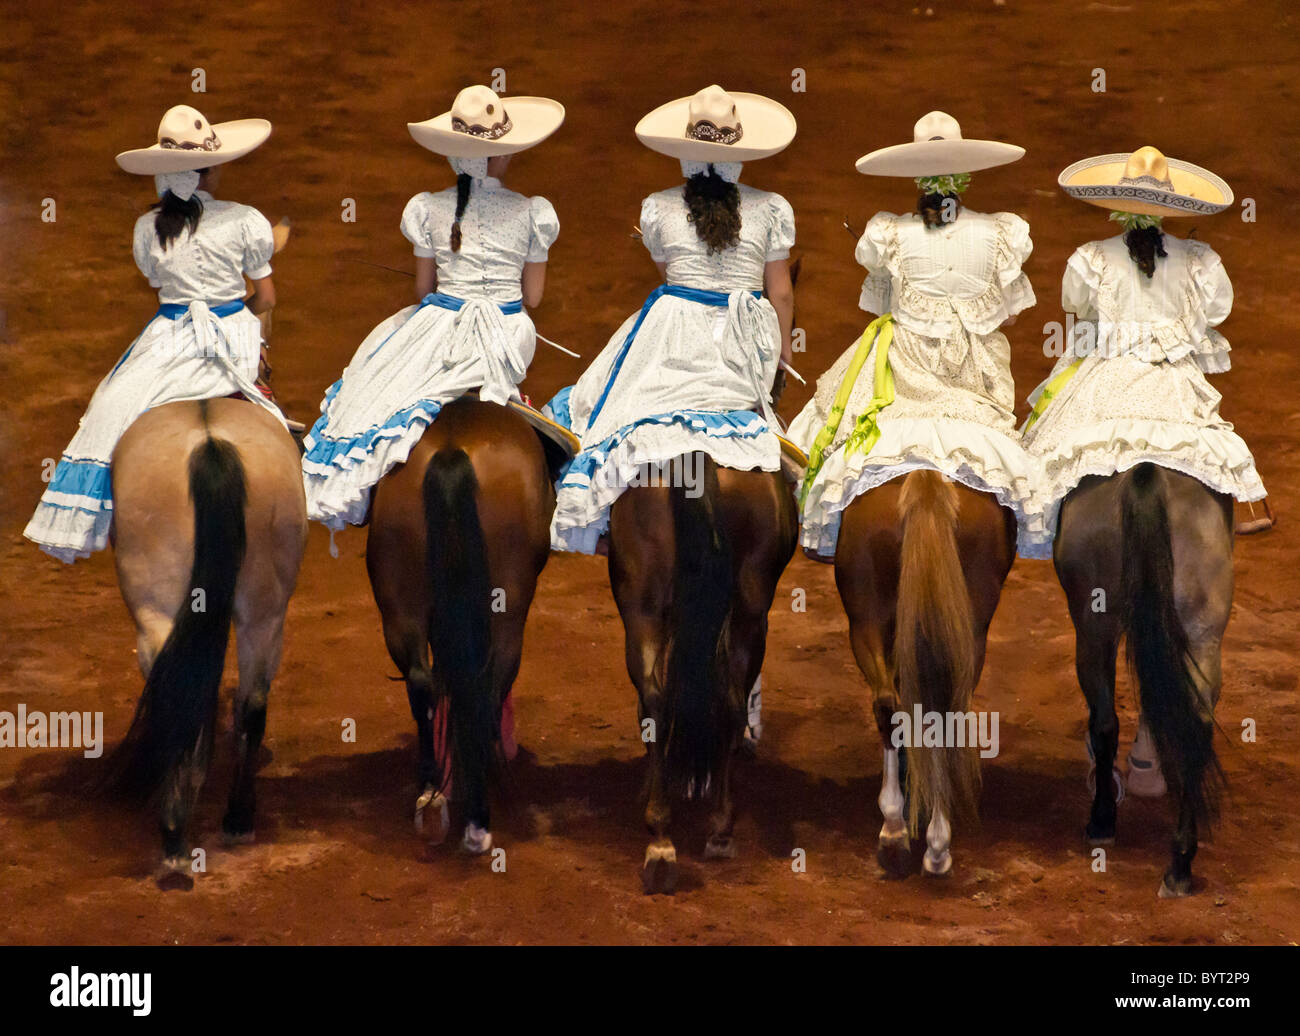 Frauen Reiter tragen traditionelle escaramuza charra Kostüme in Lienzo Charro charreada zeigen, Guadalajara, Mexiko. Stockfoto